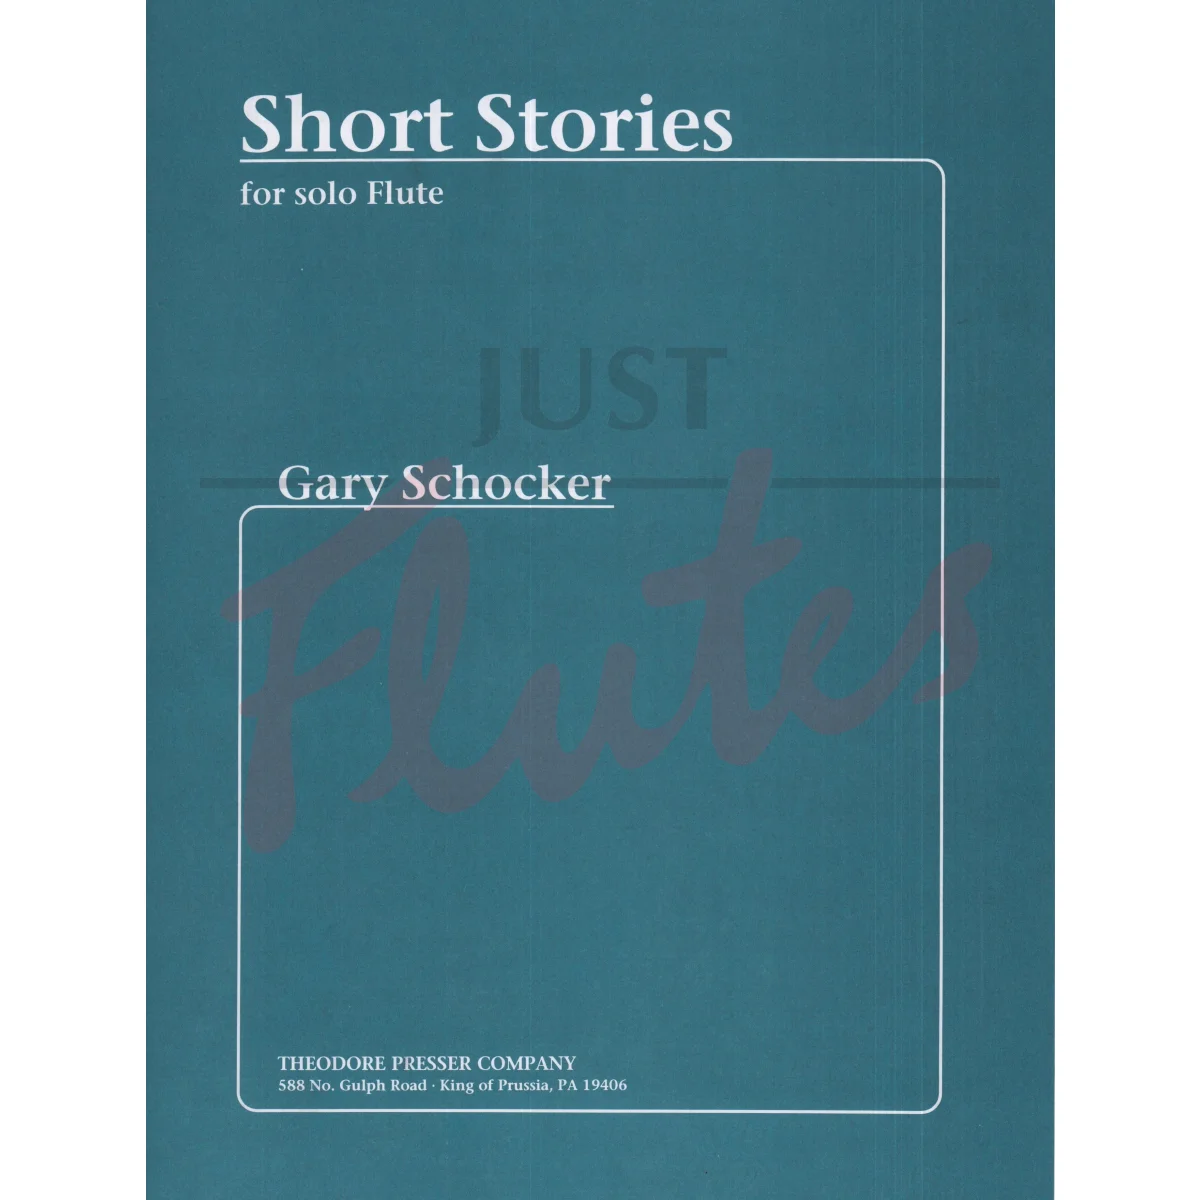 Short Stories for Solo Flute